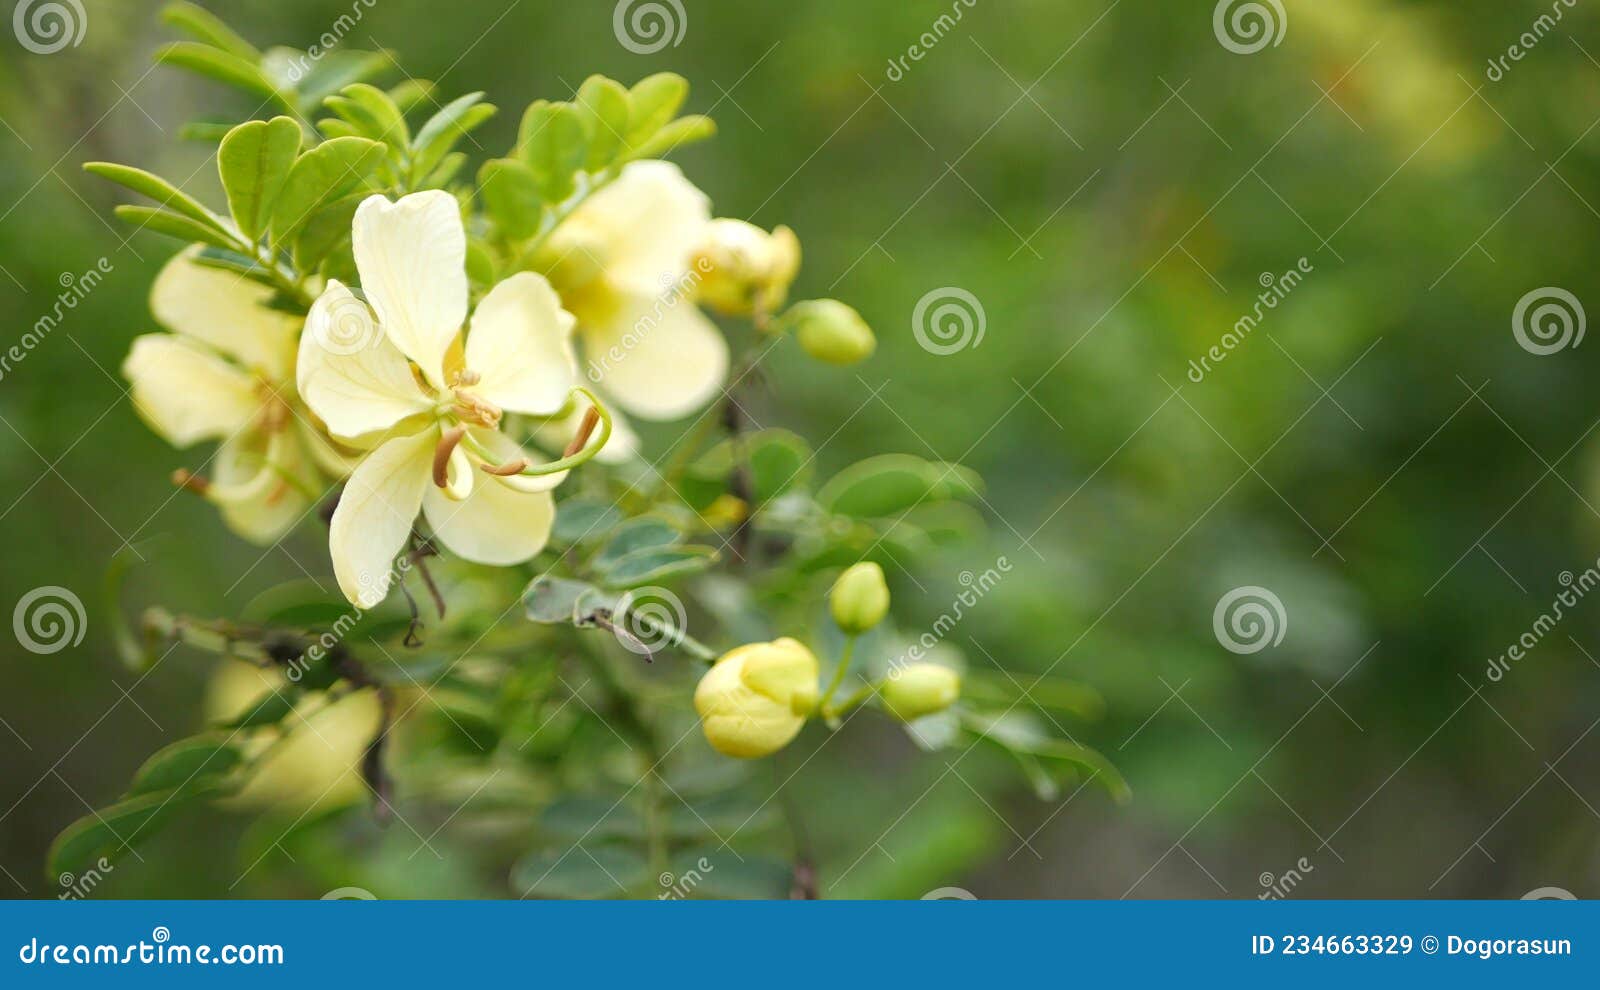 yellow senna flower in garden, california usa. cassia candlewood springtime pure bloom, romantic botanical atmosphere